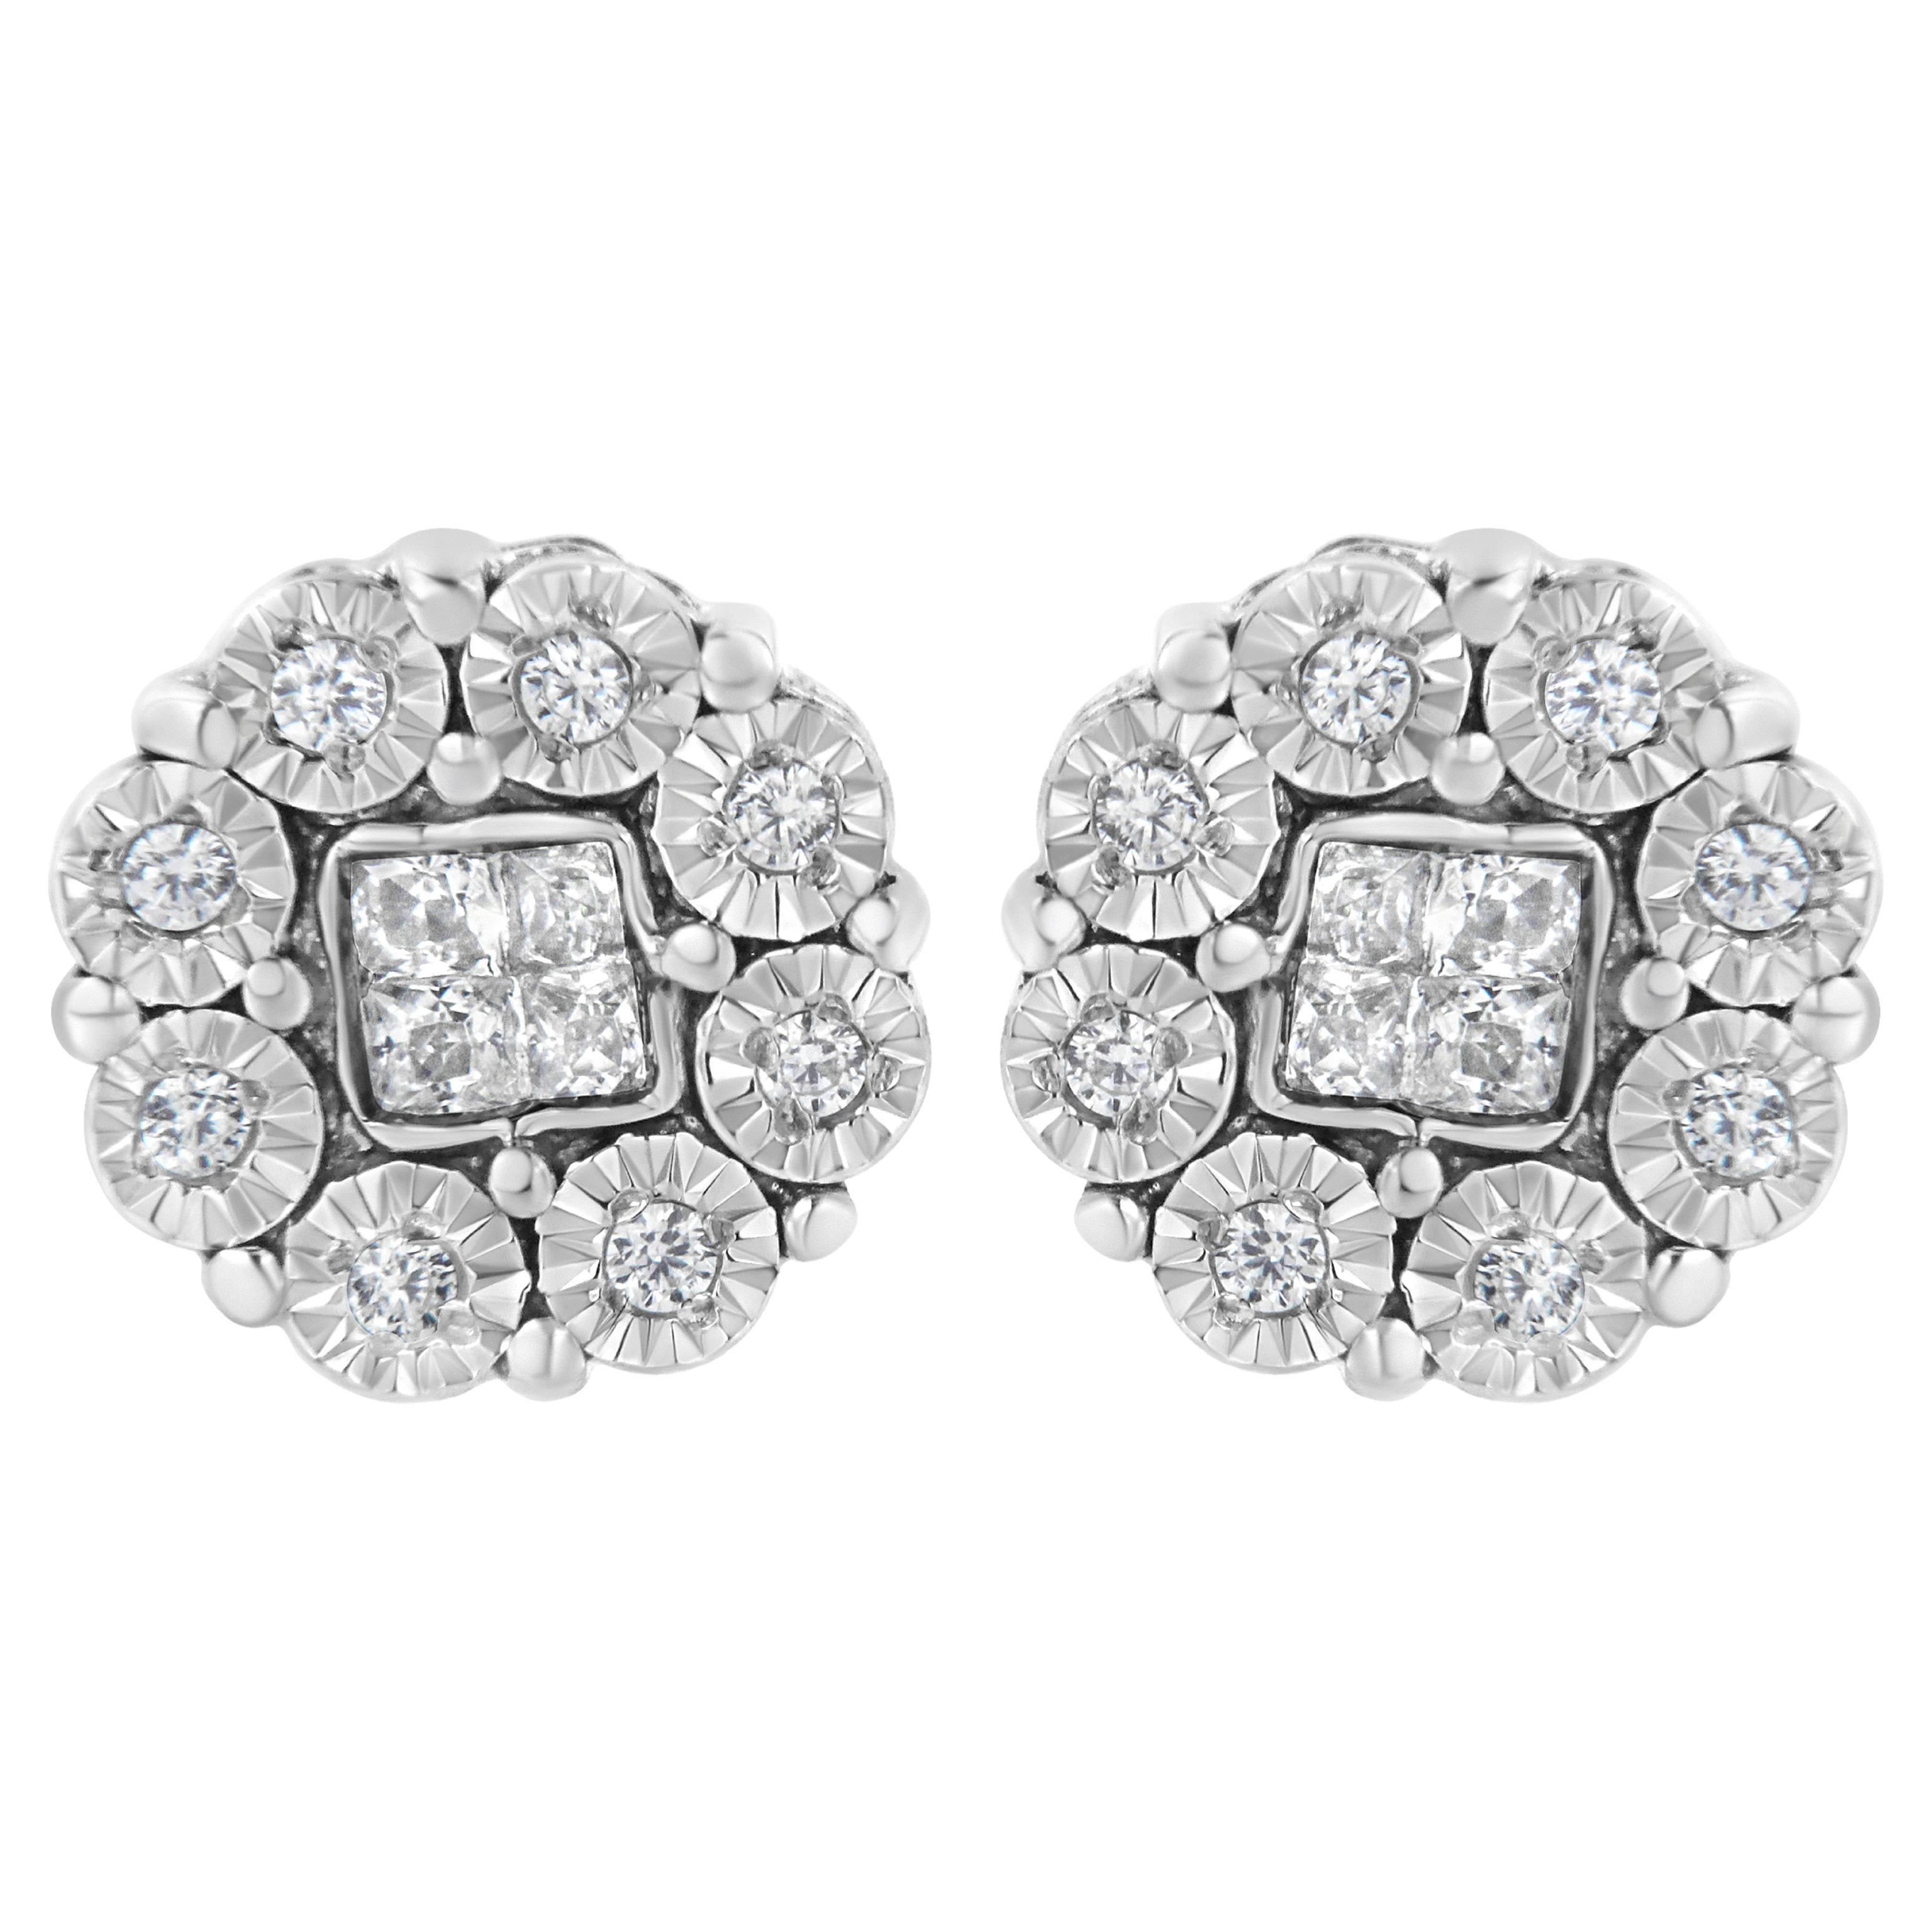 10K White Gold 1/4 Carat Diamond Floral Cluster Stud Earring